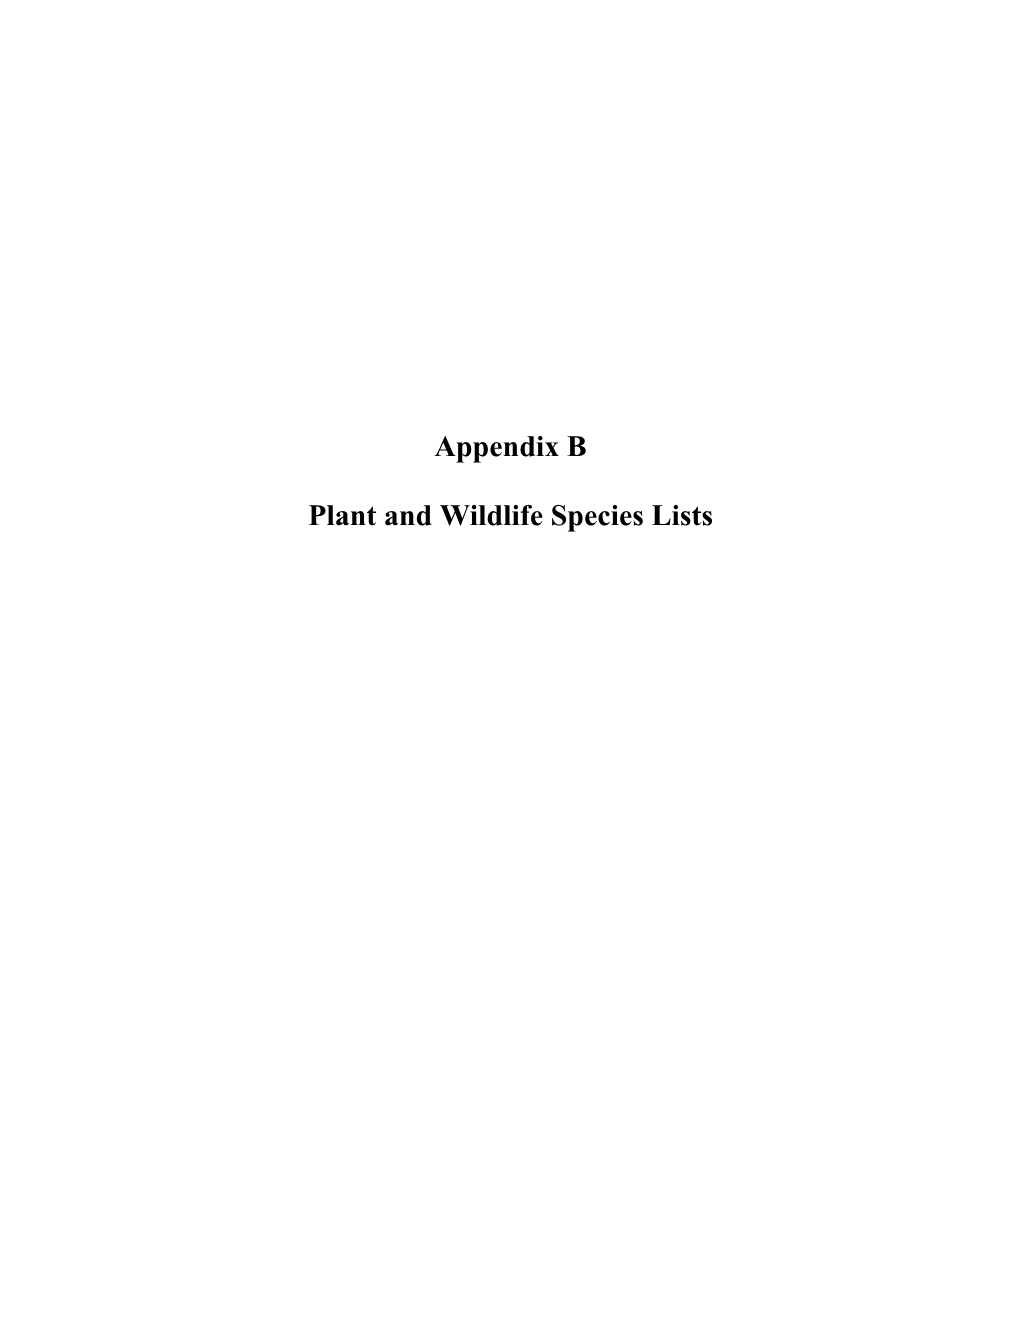 Appendix B Plant and Wildlife Species Lists